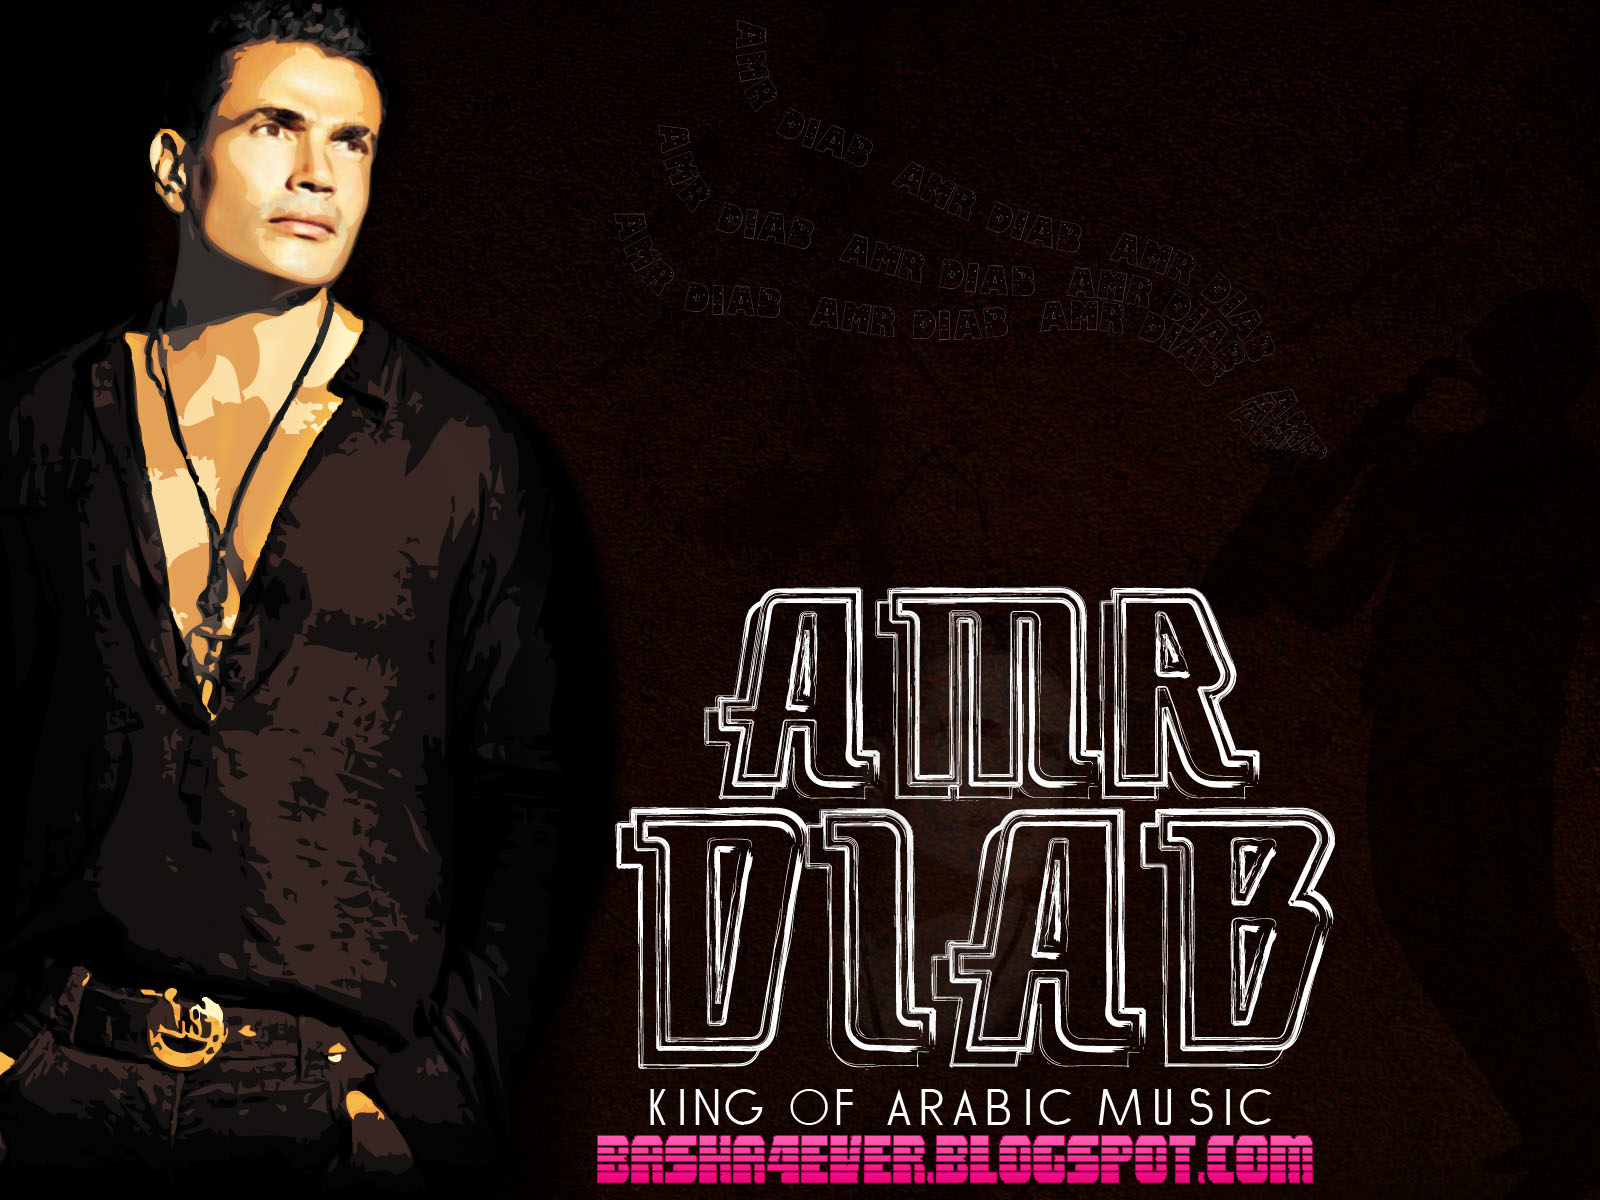 amr_diab__arabic_singer_music_by_mohammed_diab-d3cn8li.jpg